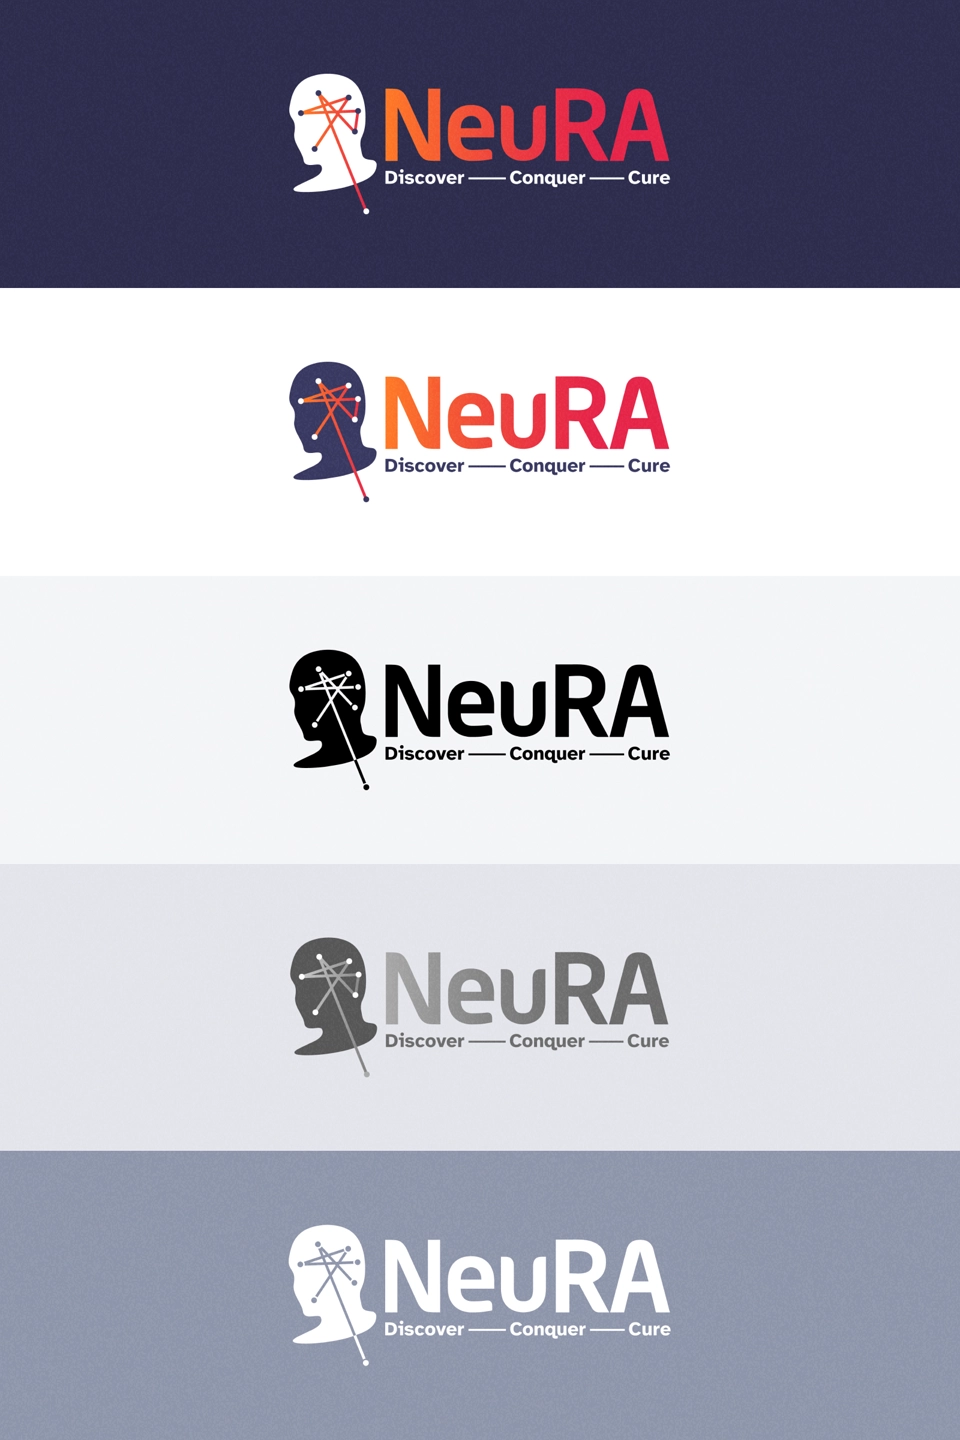 NeuRA brand - logo and variations